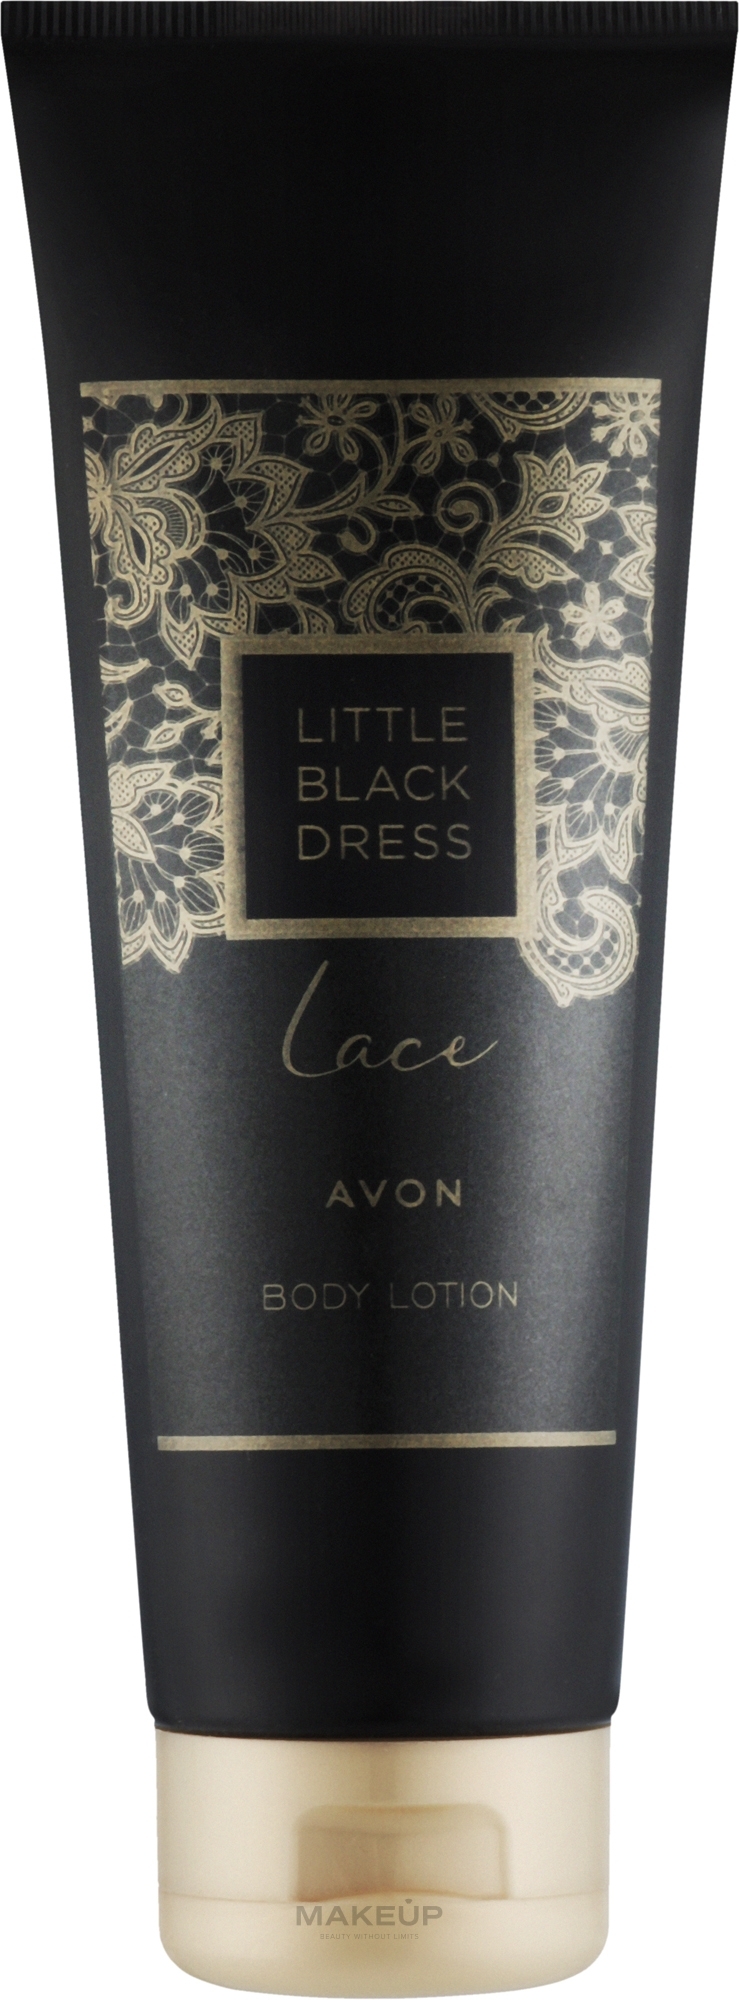 Avon Little Black Dress Lace - Парфюмированный бальзам для тела — фото 125ml